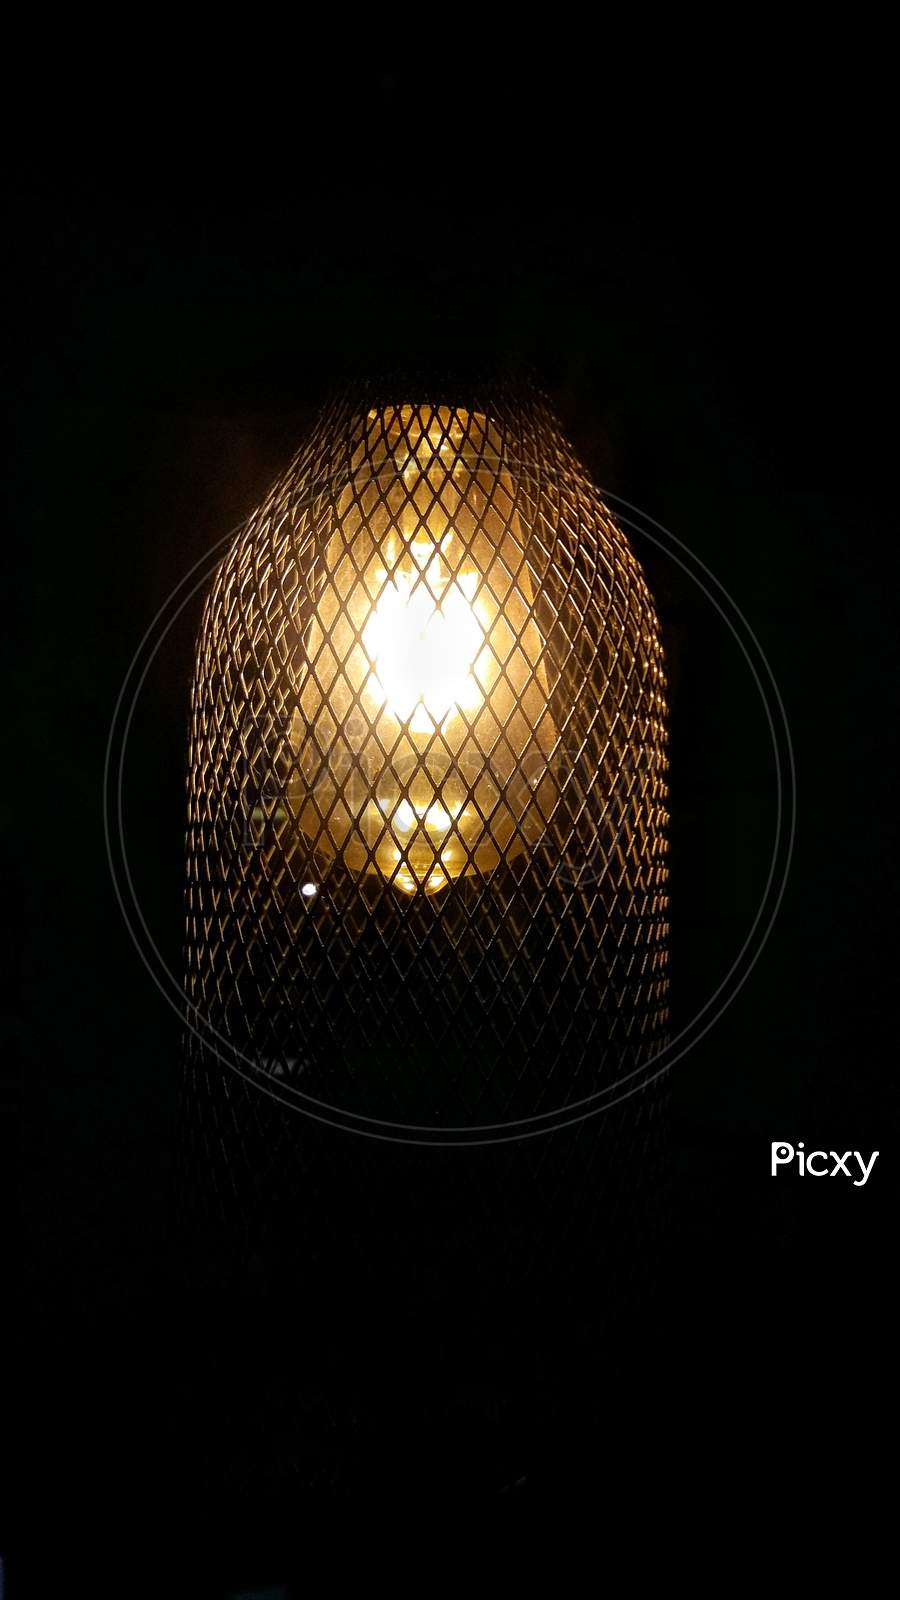 Vintage Light Bulb Lamp Glowing In The Dark.